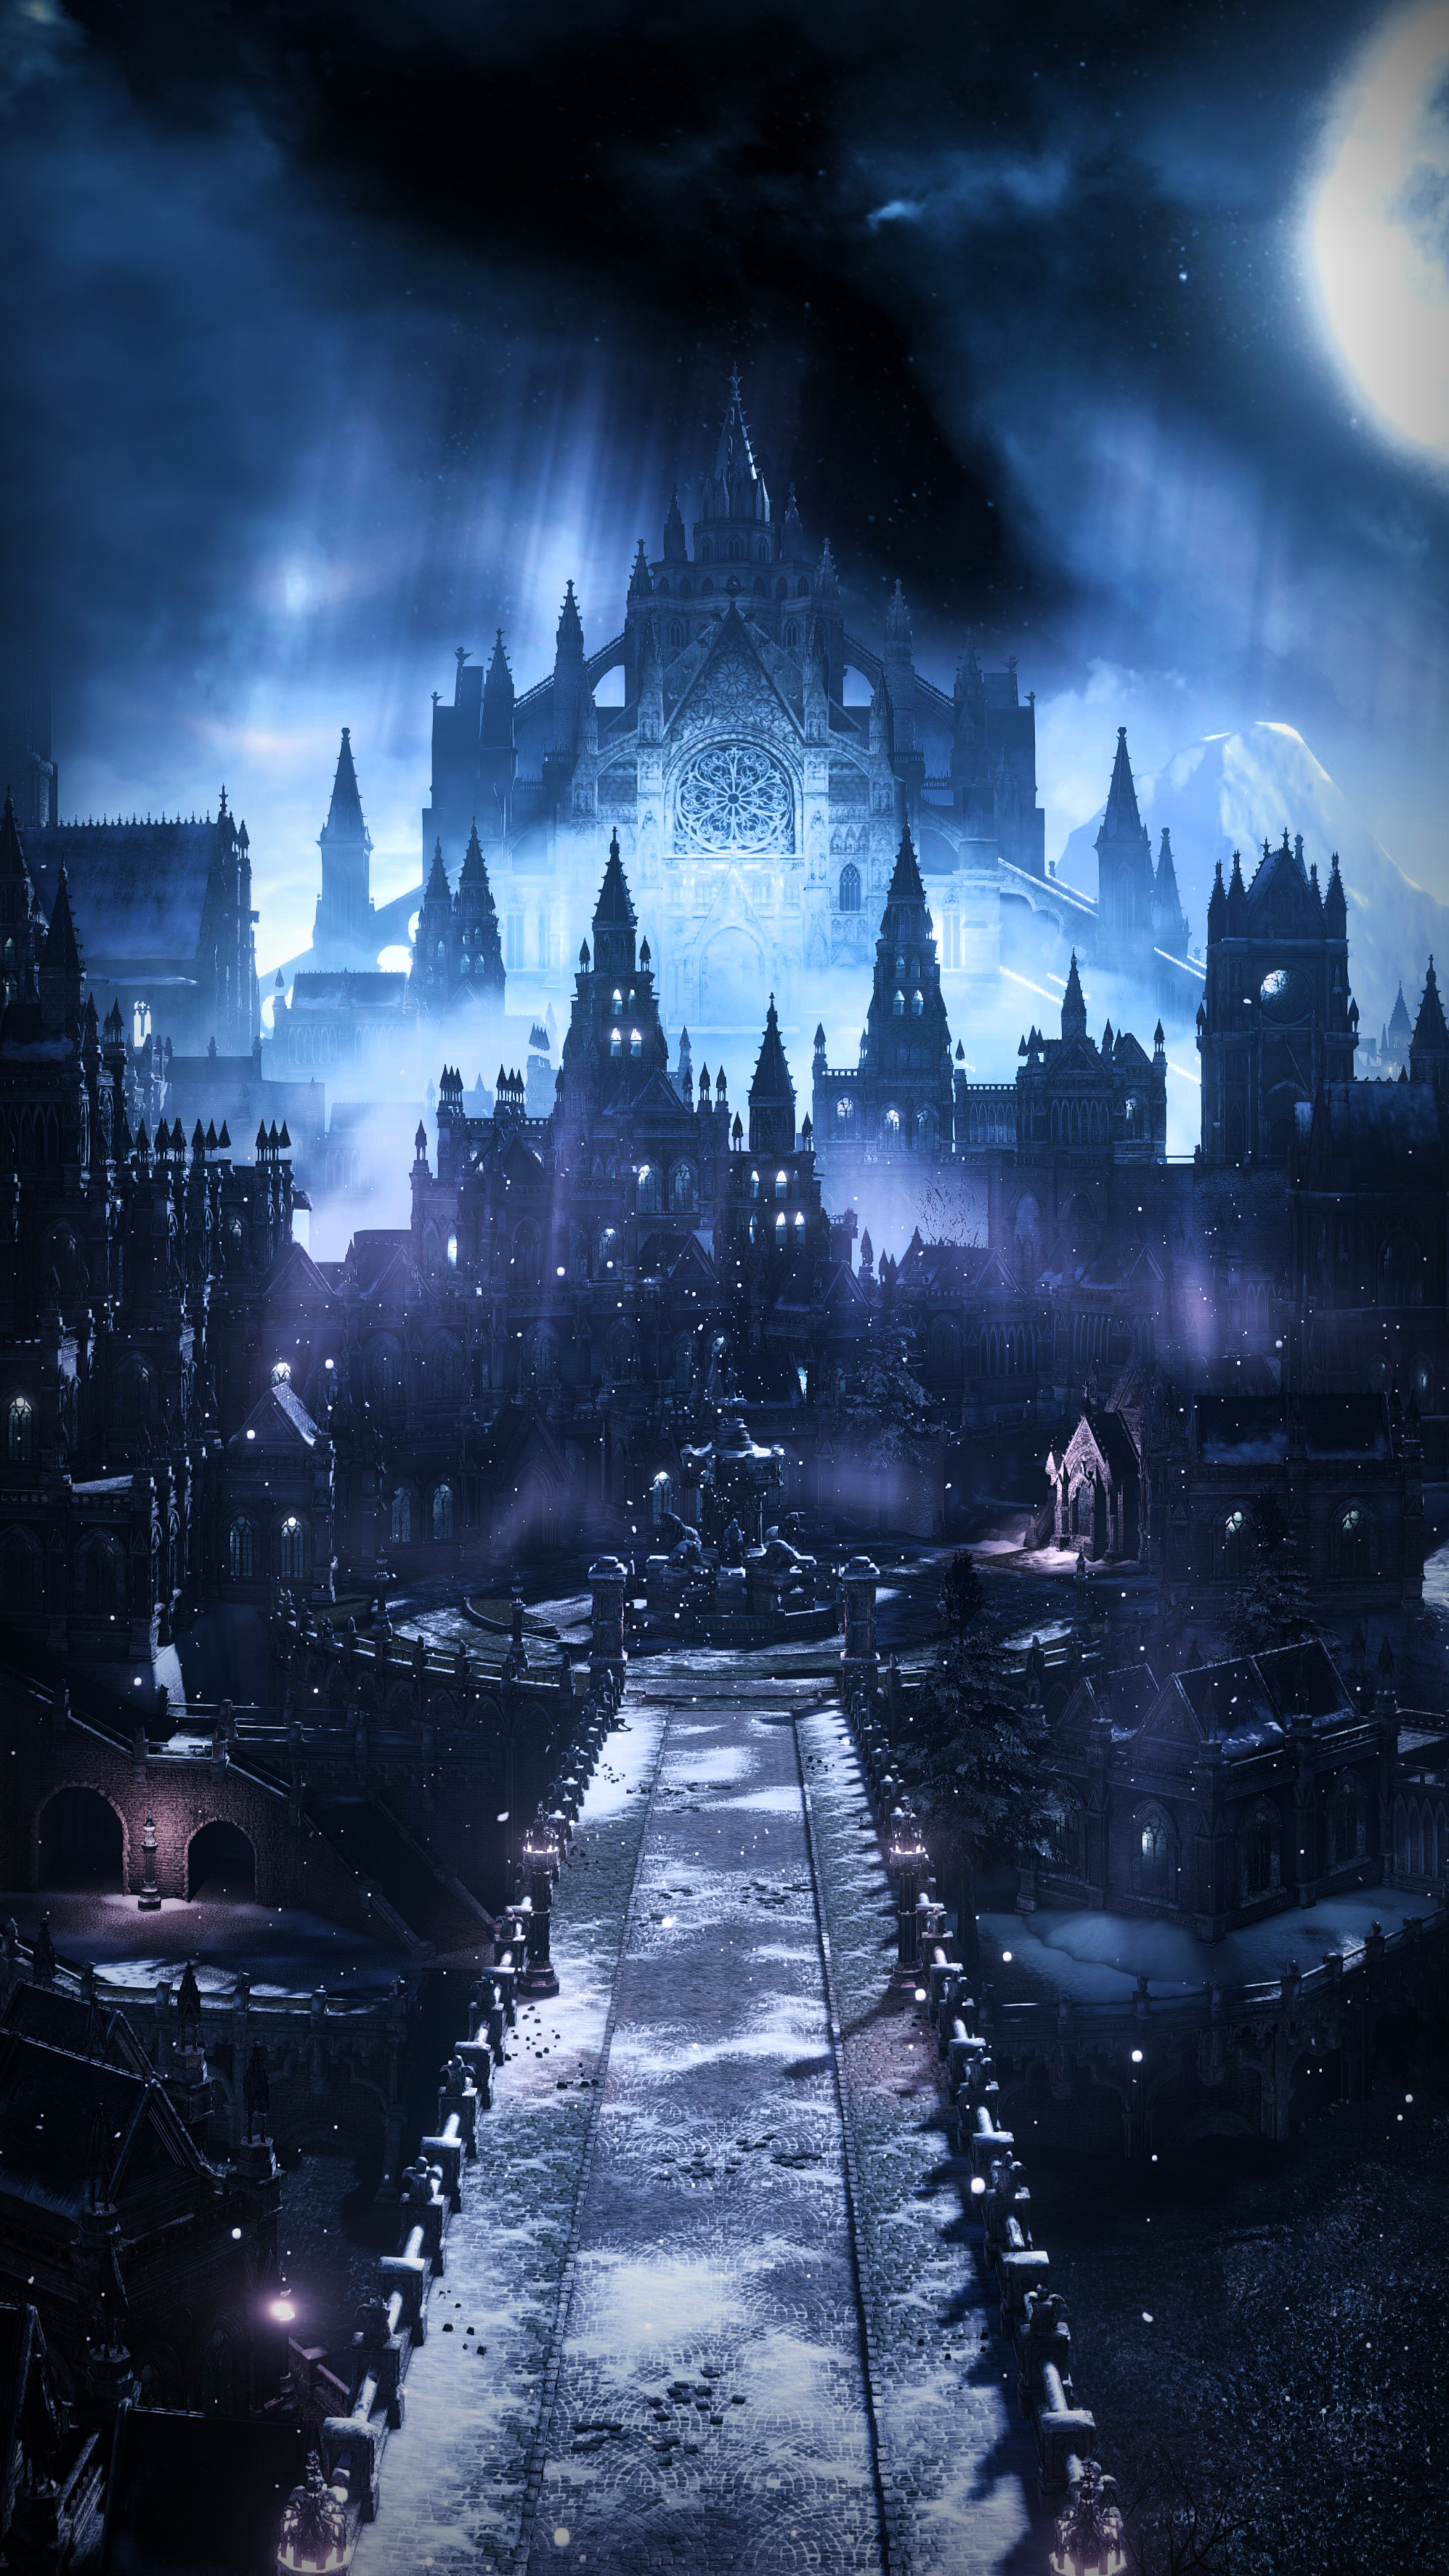 Dark Souls 3 - 4K Wallpaper Collection + DLC [Here we go again!] :  r/darksouls3